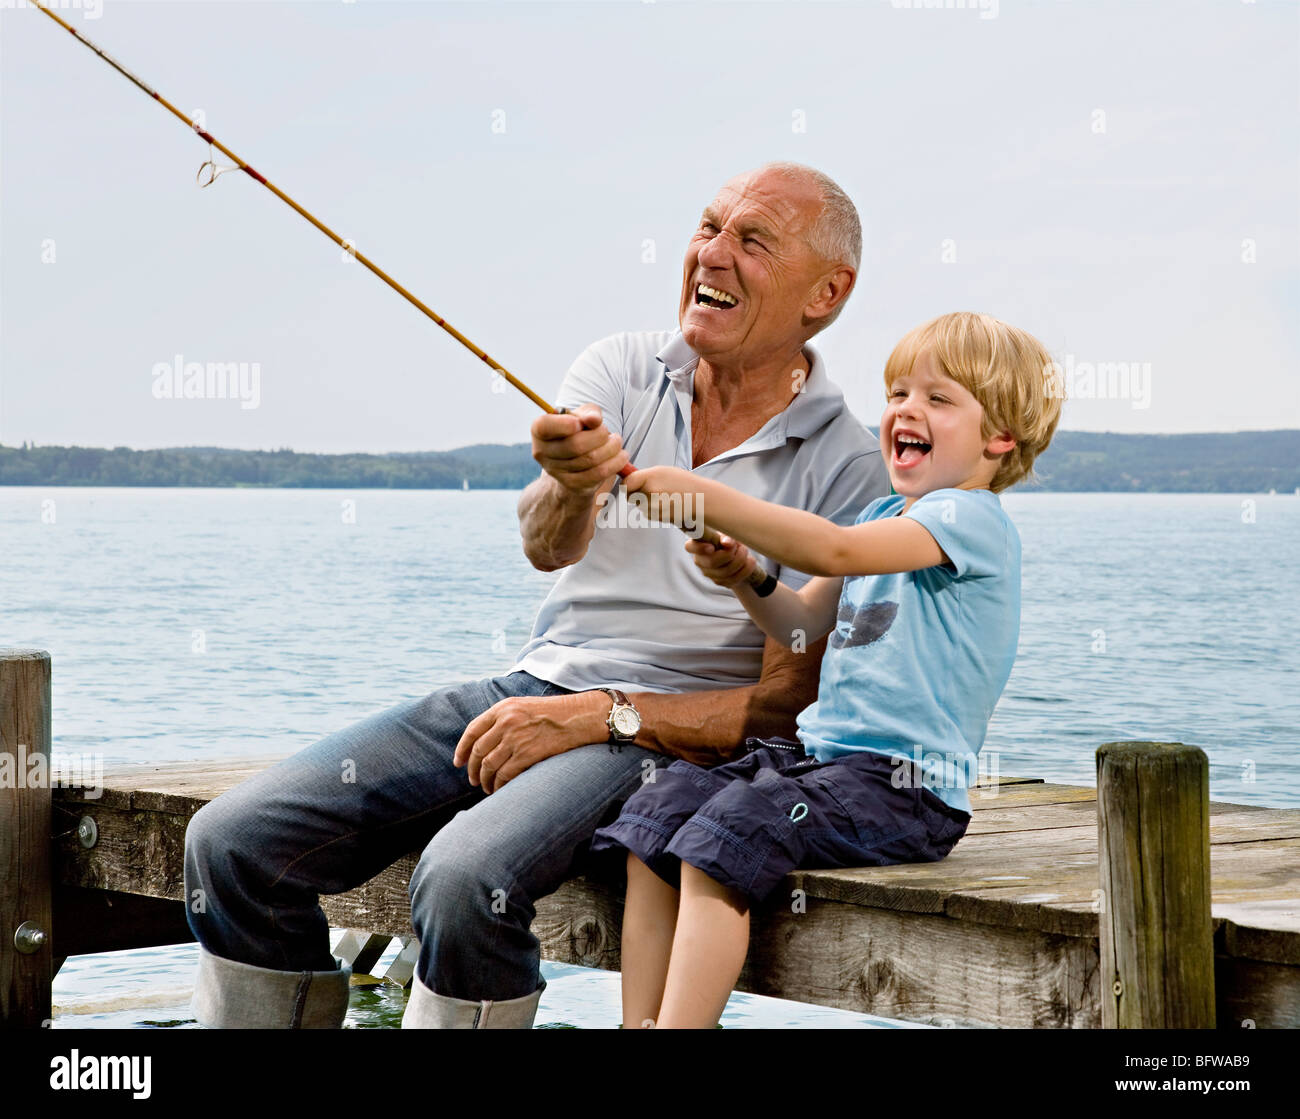 boy fishing with grandfather at lake Stock Photo - Alamy